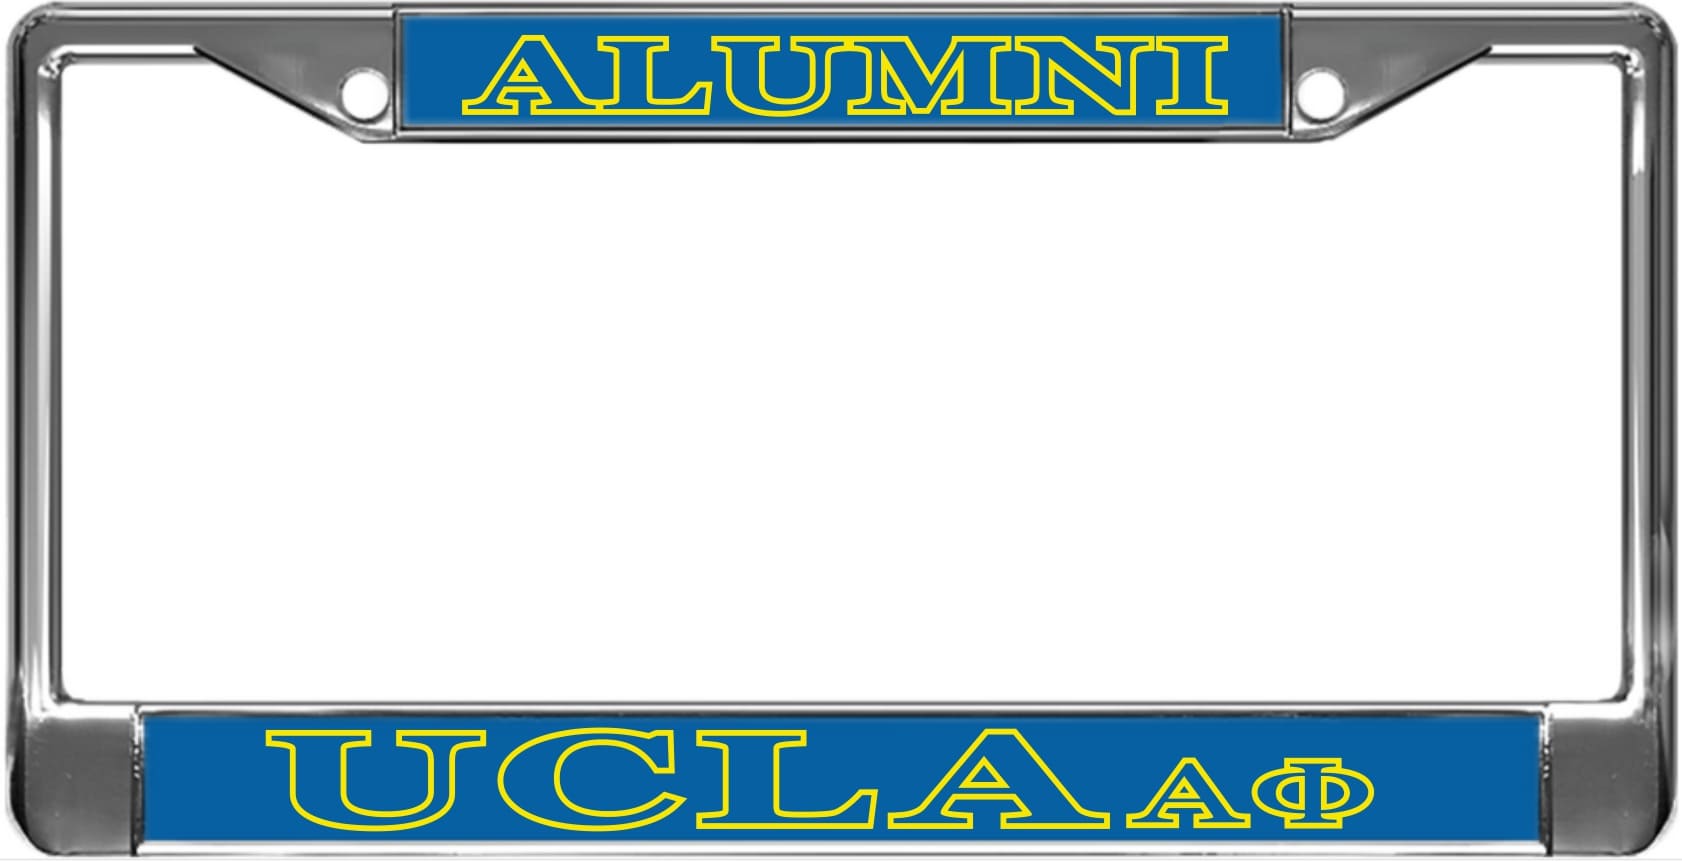 UCLA Alumni - custom metal license plate frame